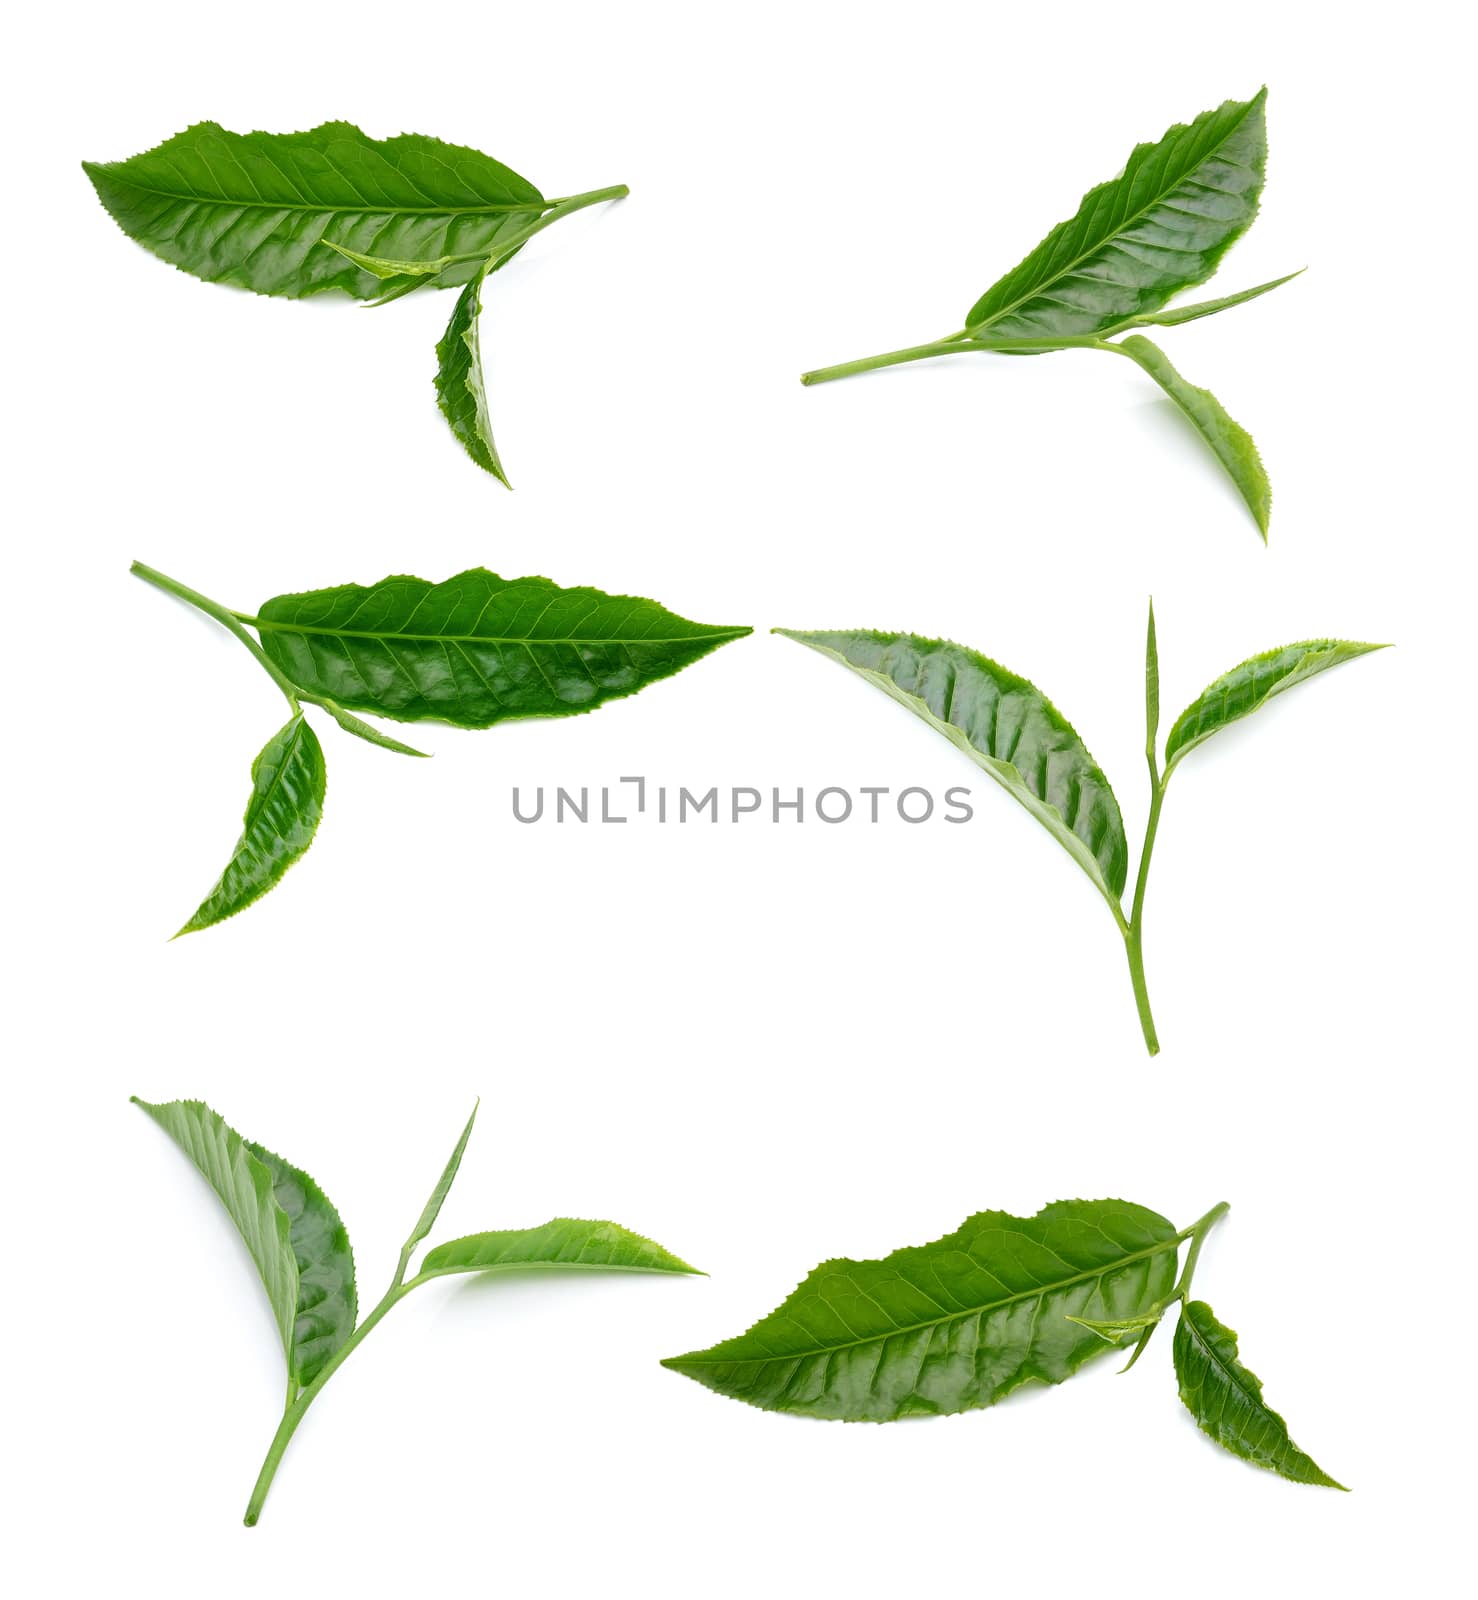 tea leaf isolated on white background